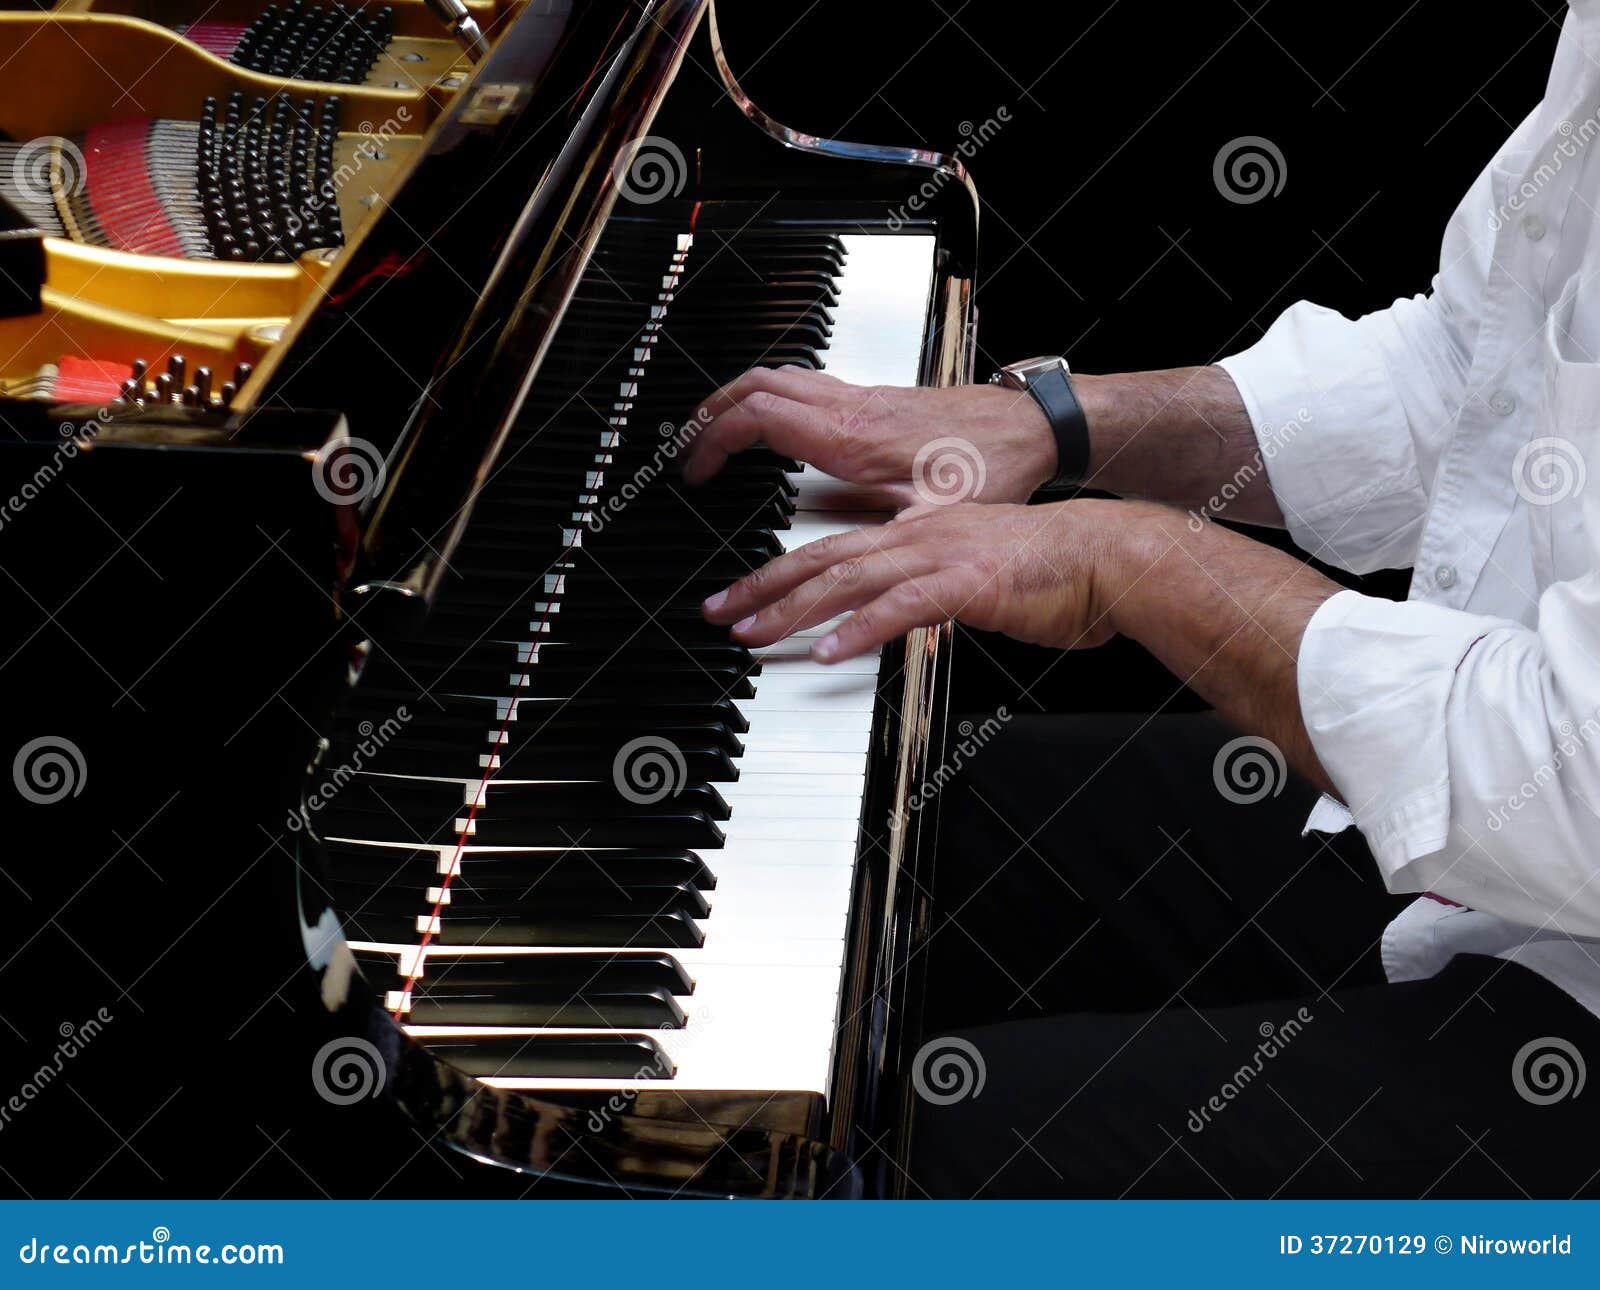 pianist plays jazz music